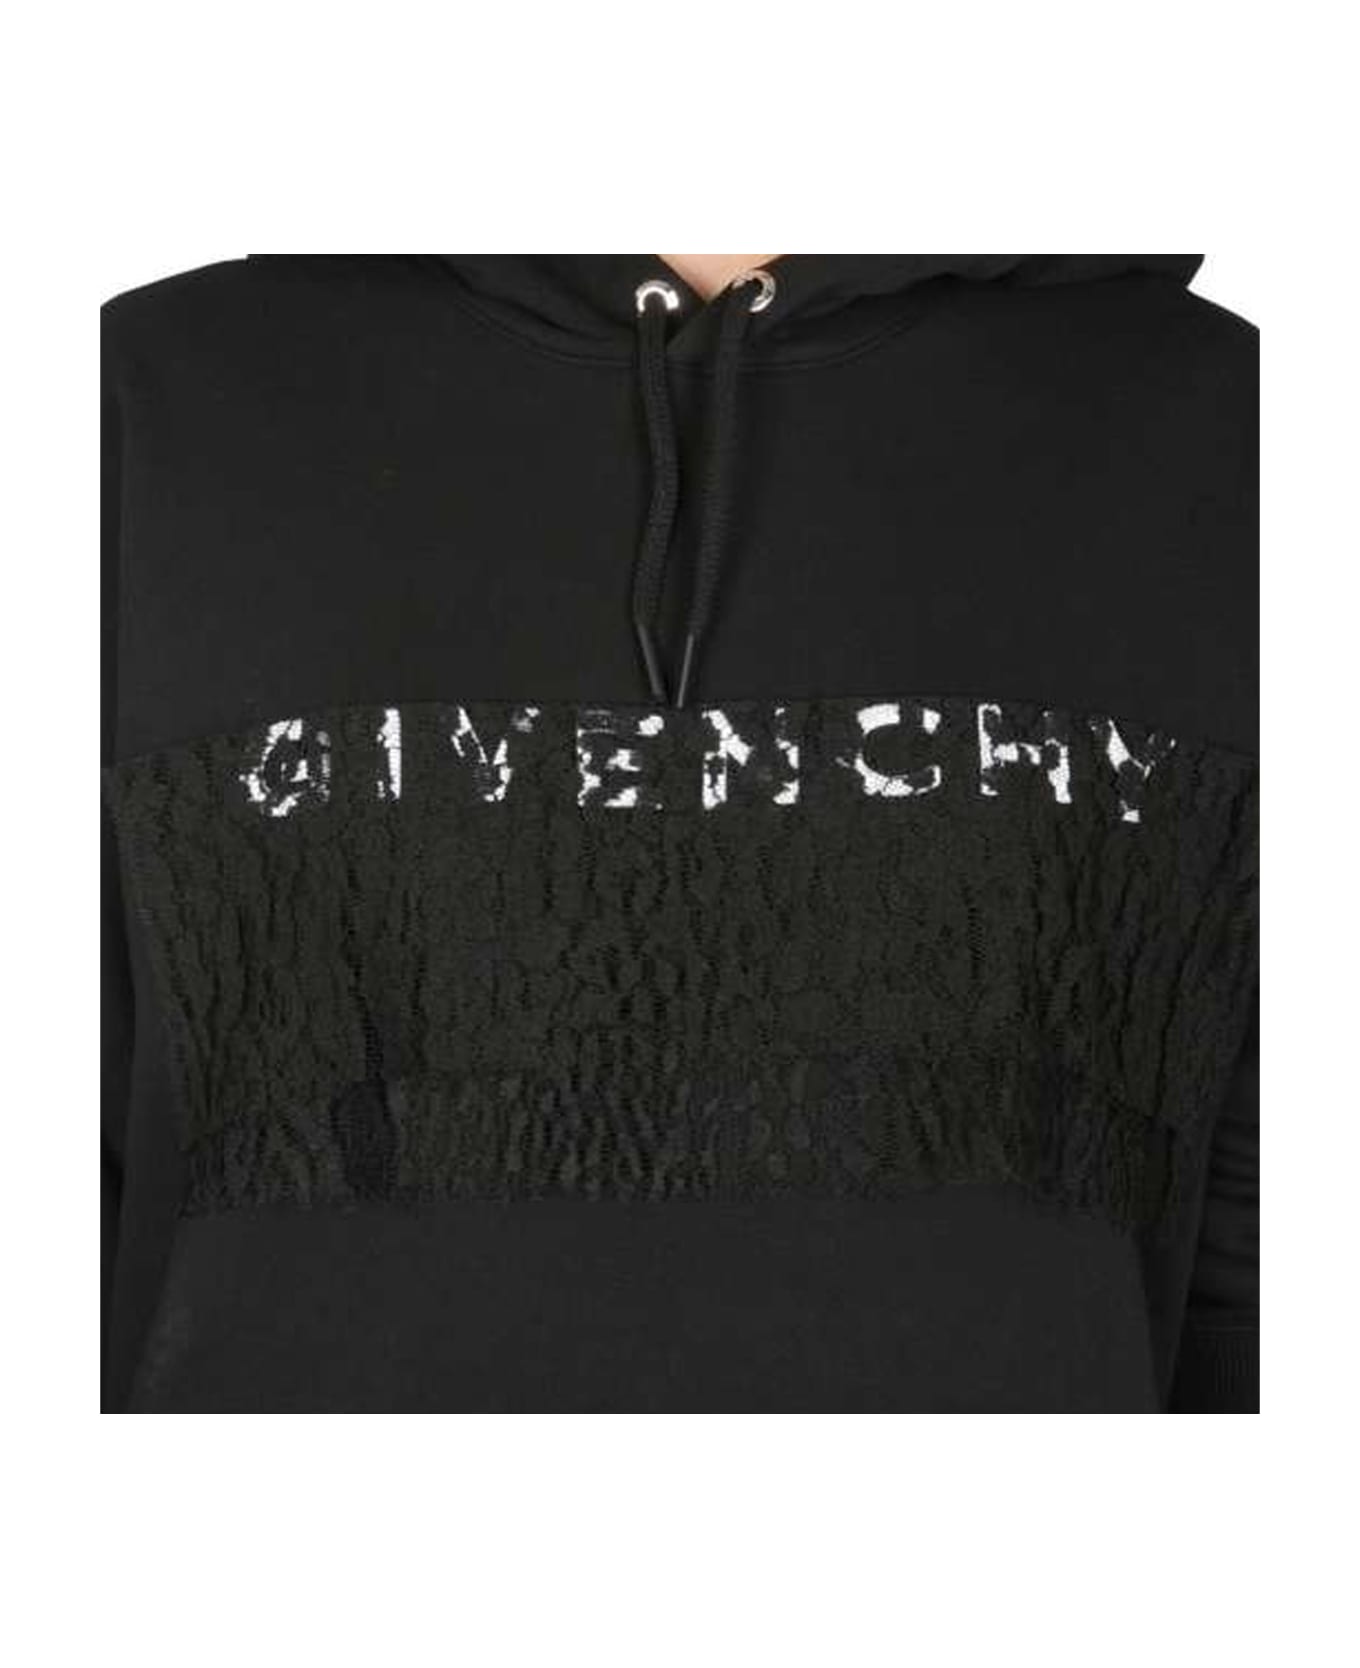 Givenchy Logo Hooded Sweatshirt - Black